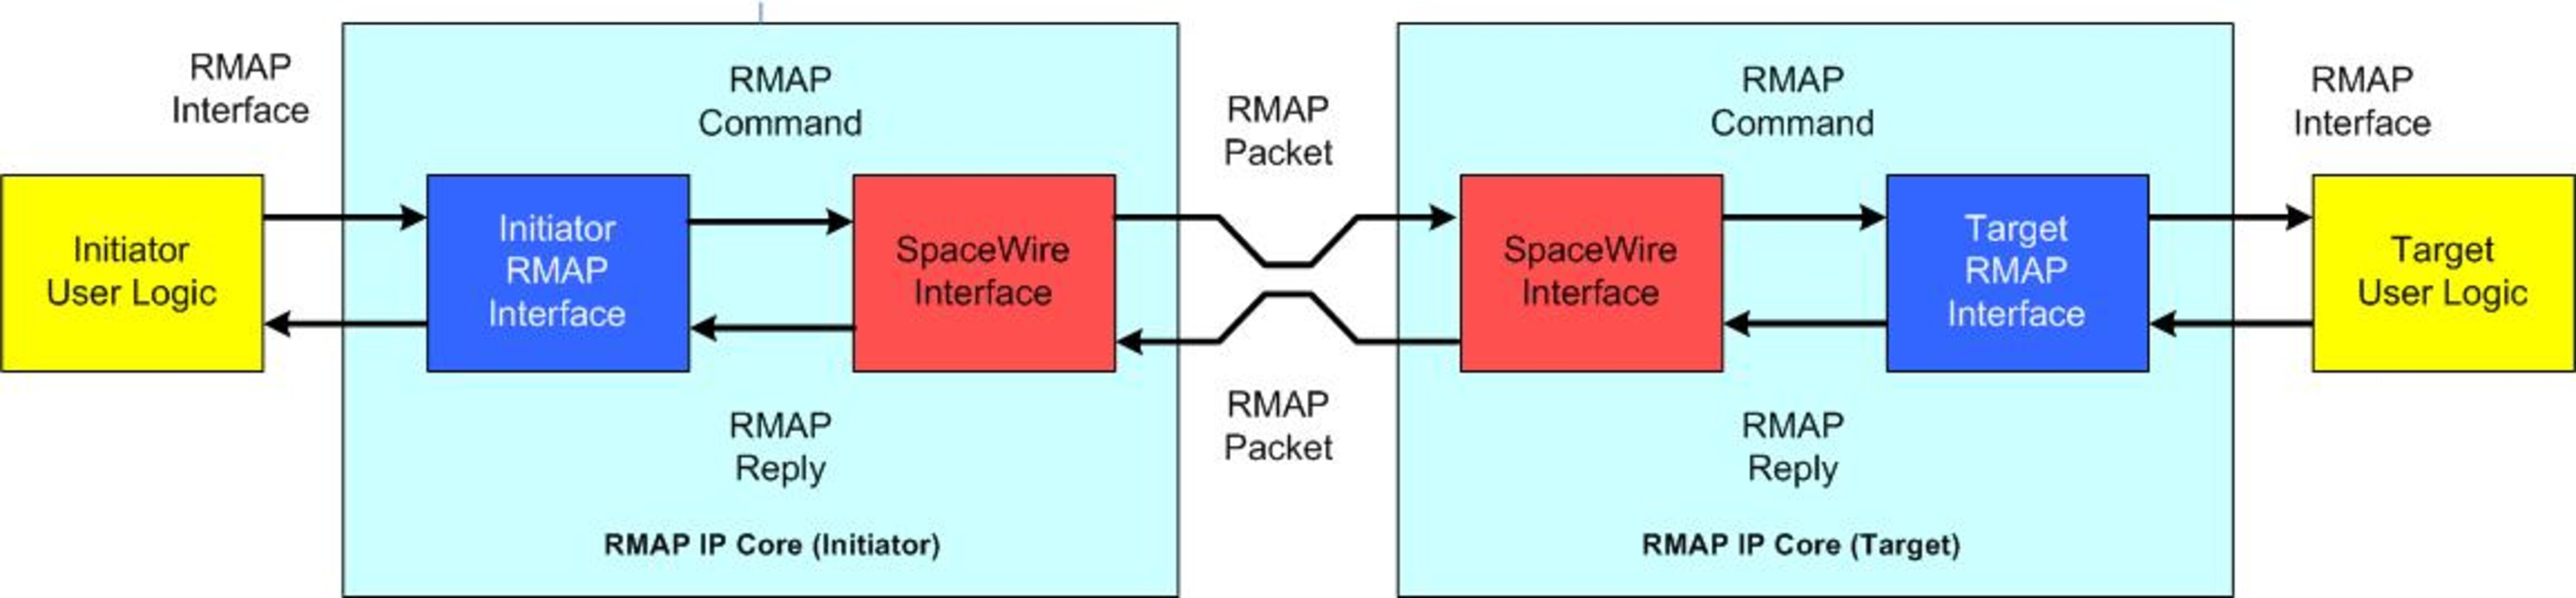 RMAP IP Core Data Flow